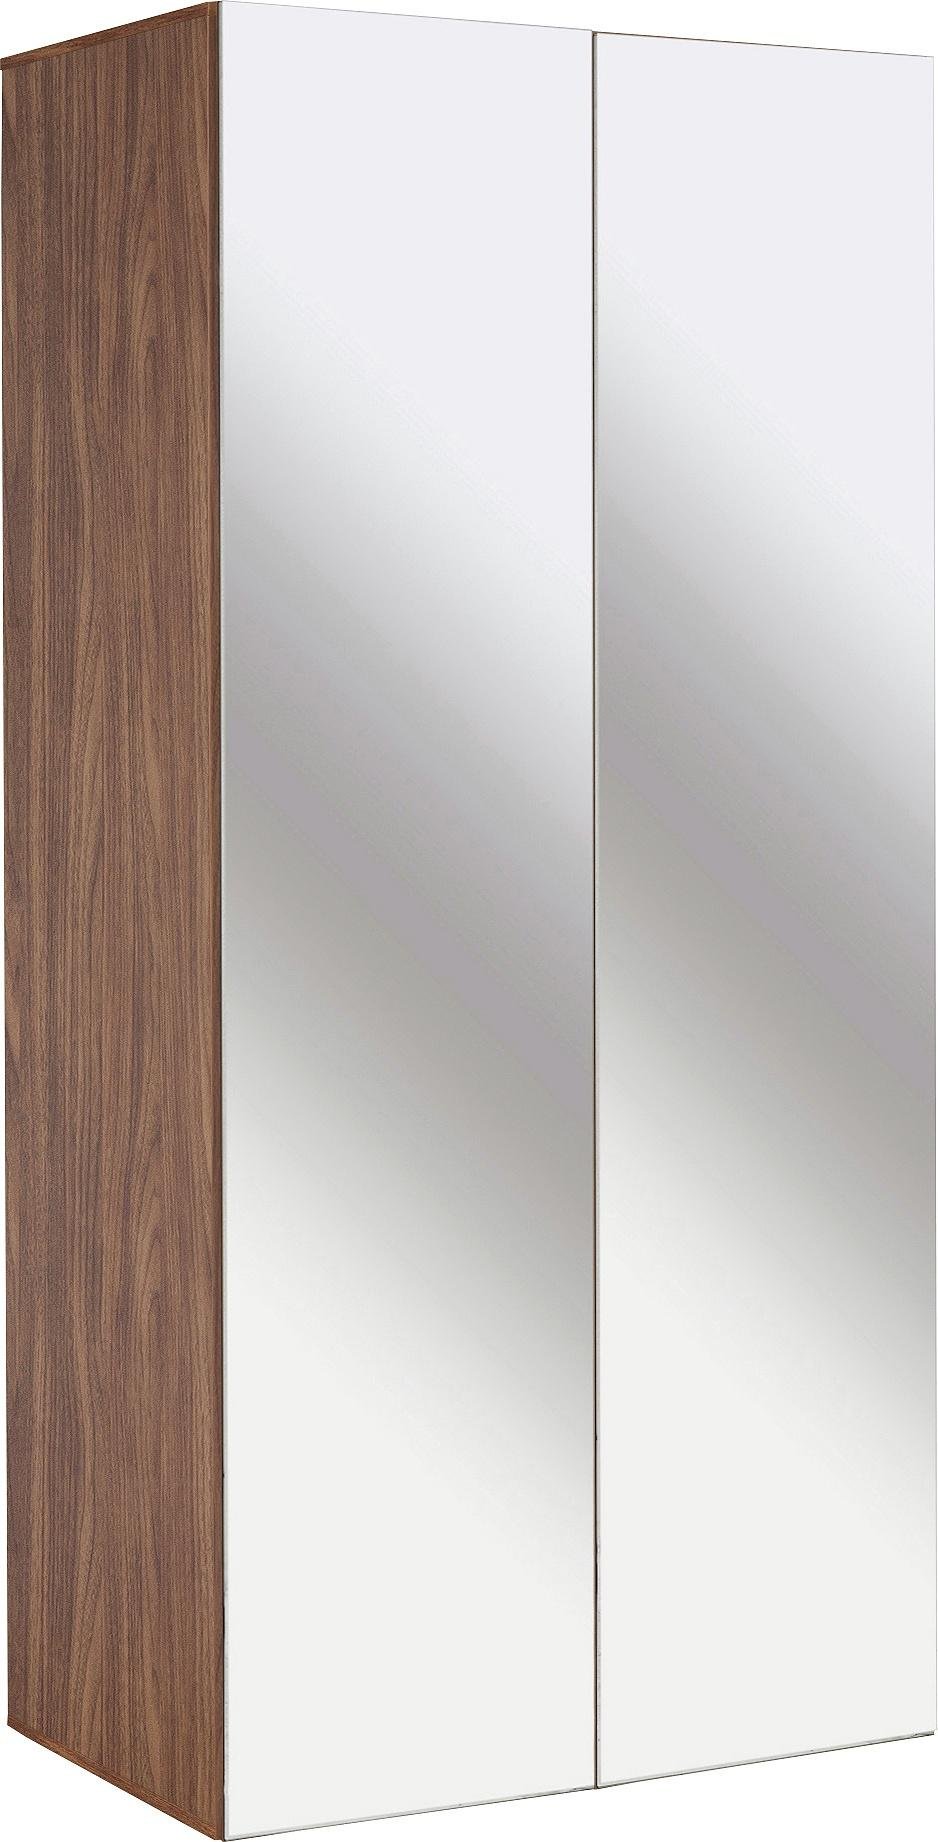 Argos Home Atlas Walnut Effect 2 Door Mirrored Tall Wardrobe